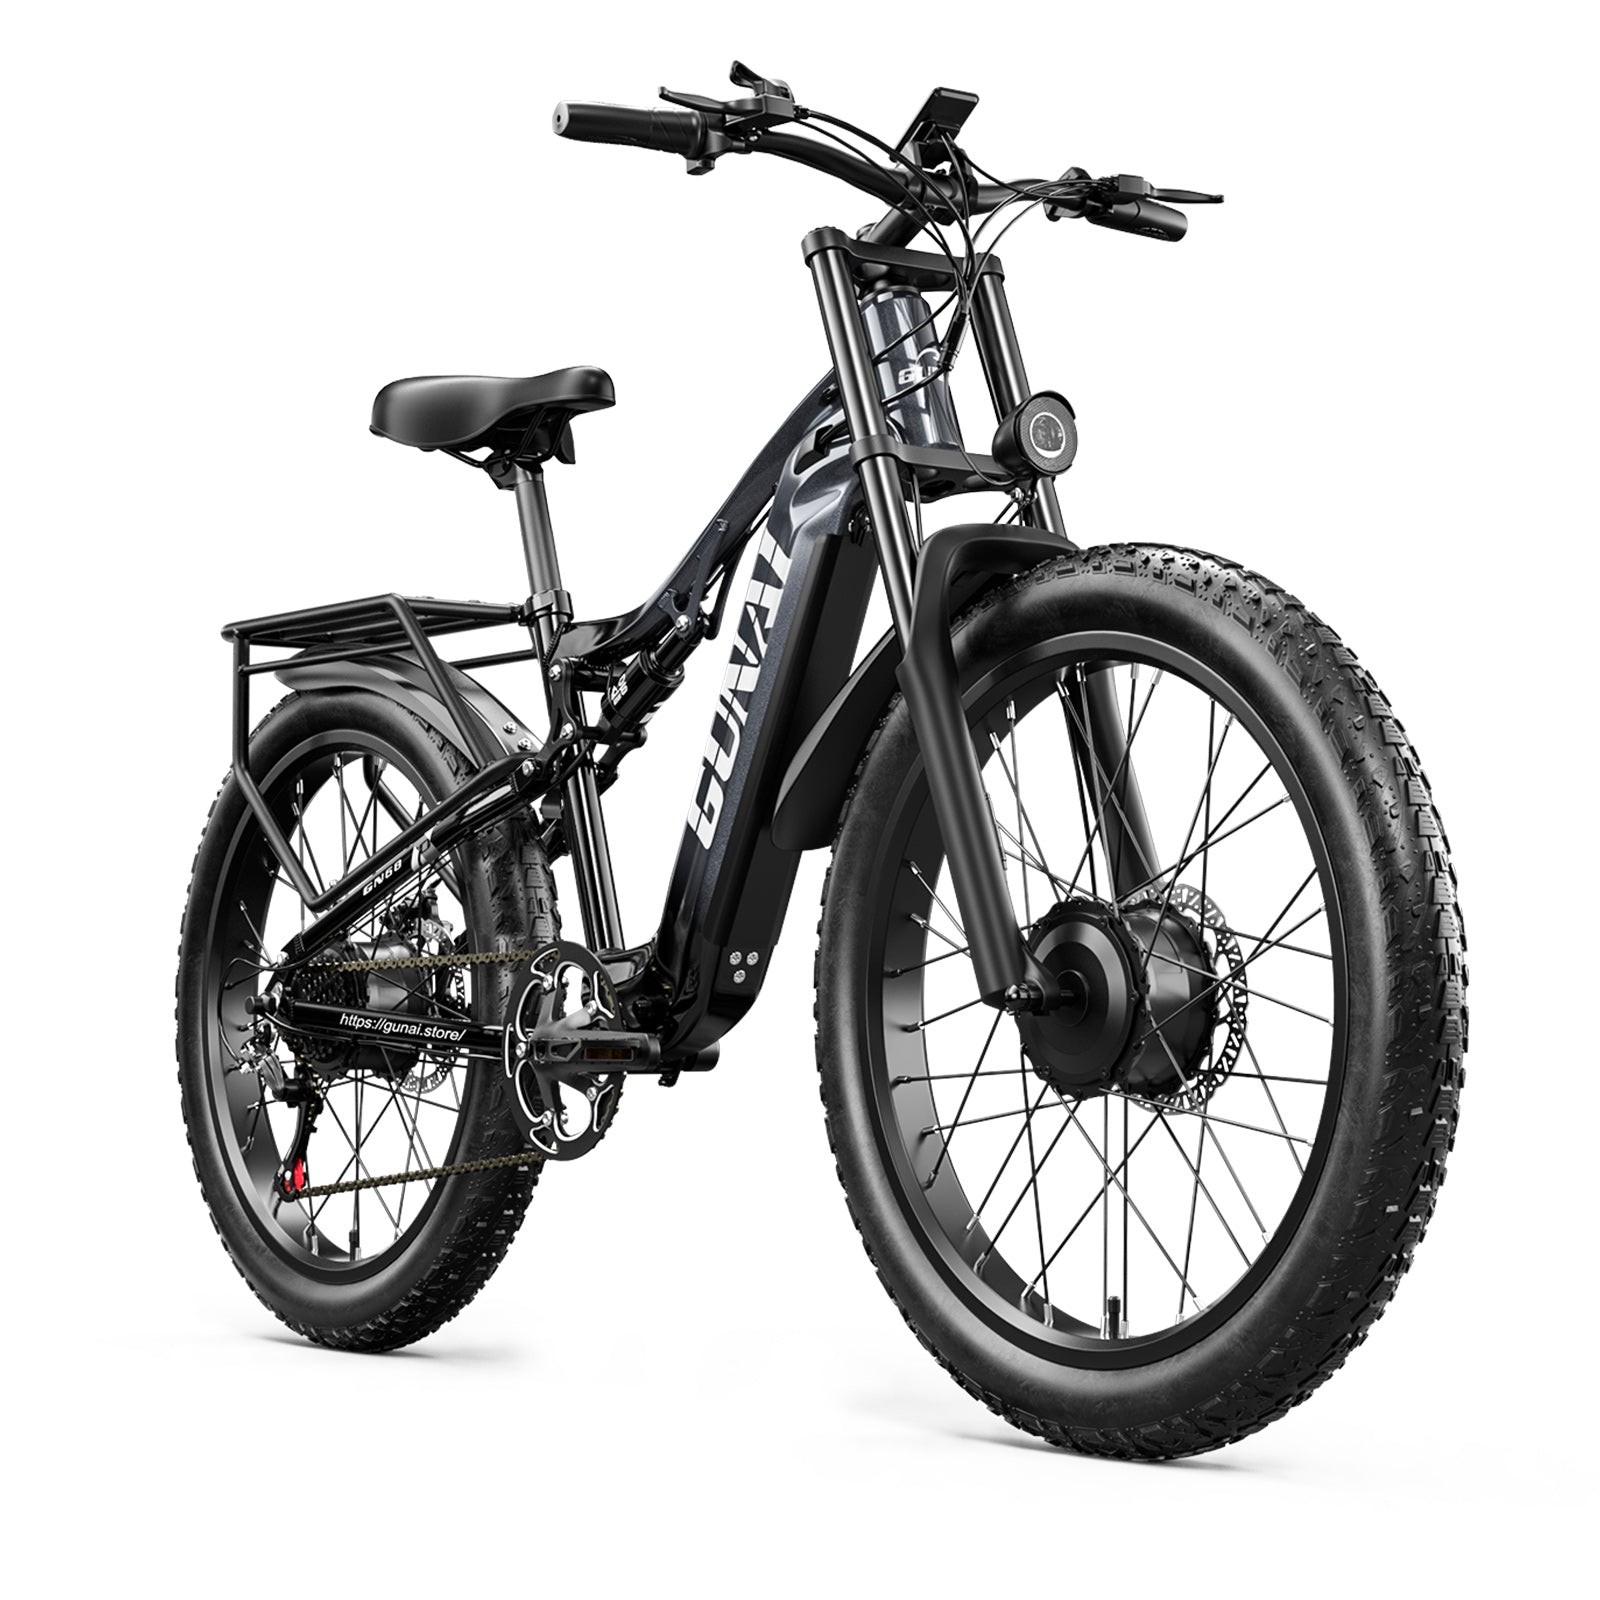 【New Product】 GUNAI GN68 2000W Brushless Motor Electric Bicycle